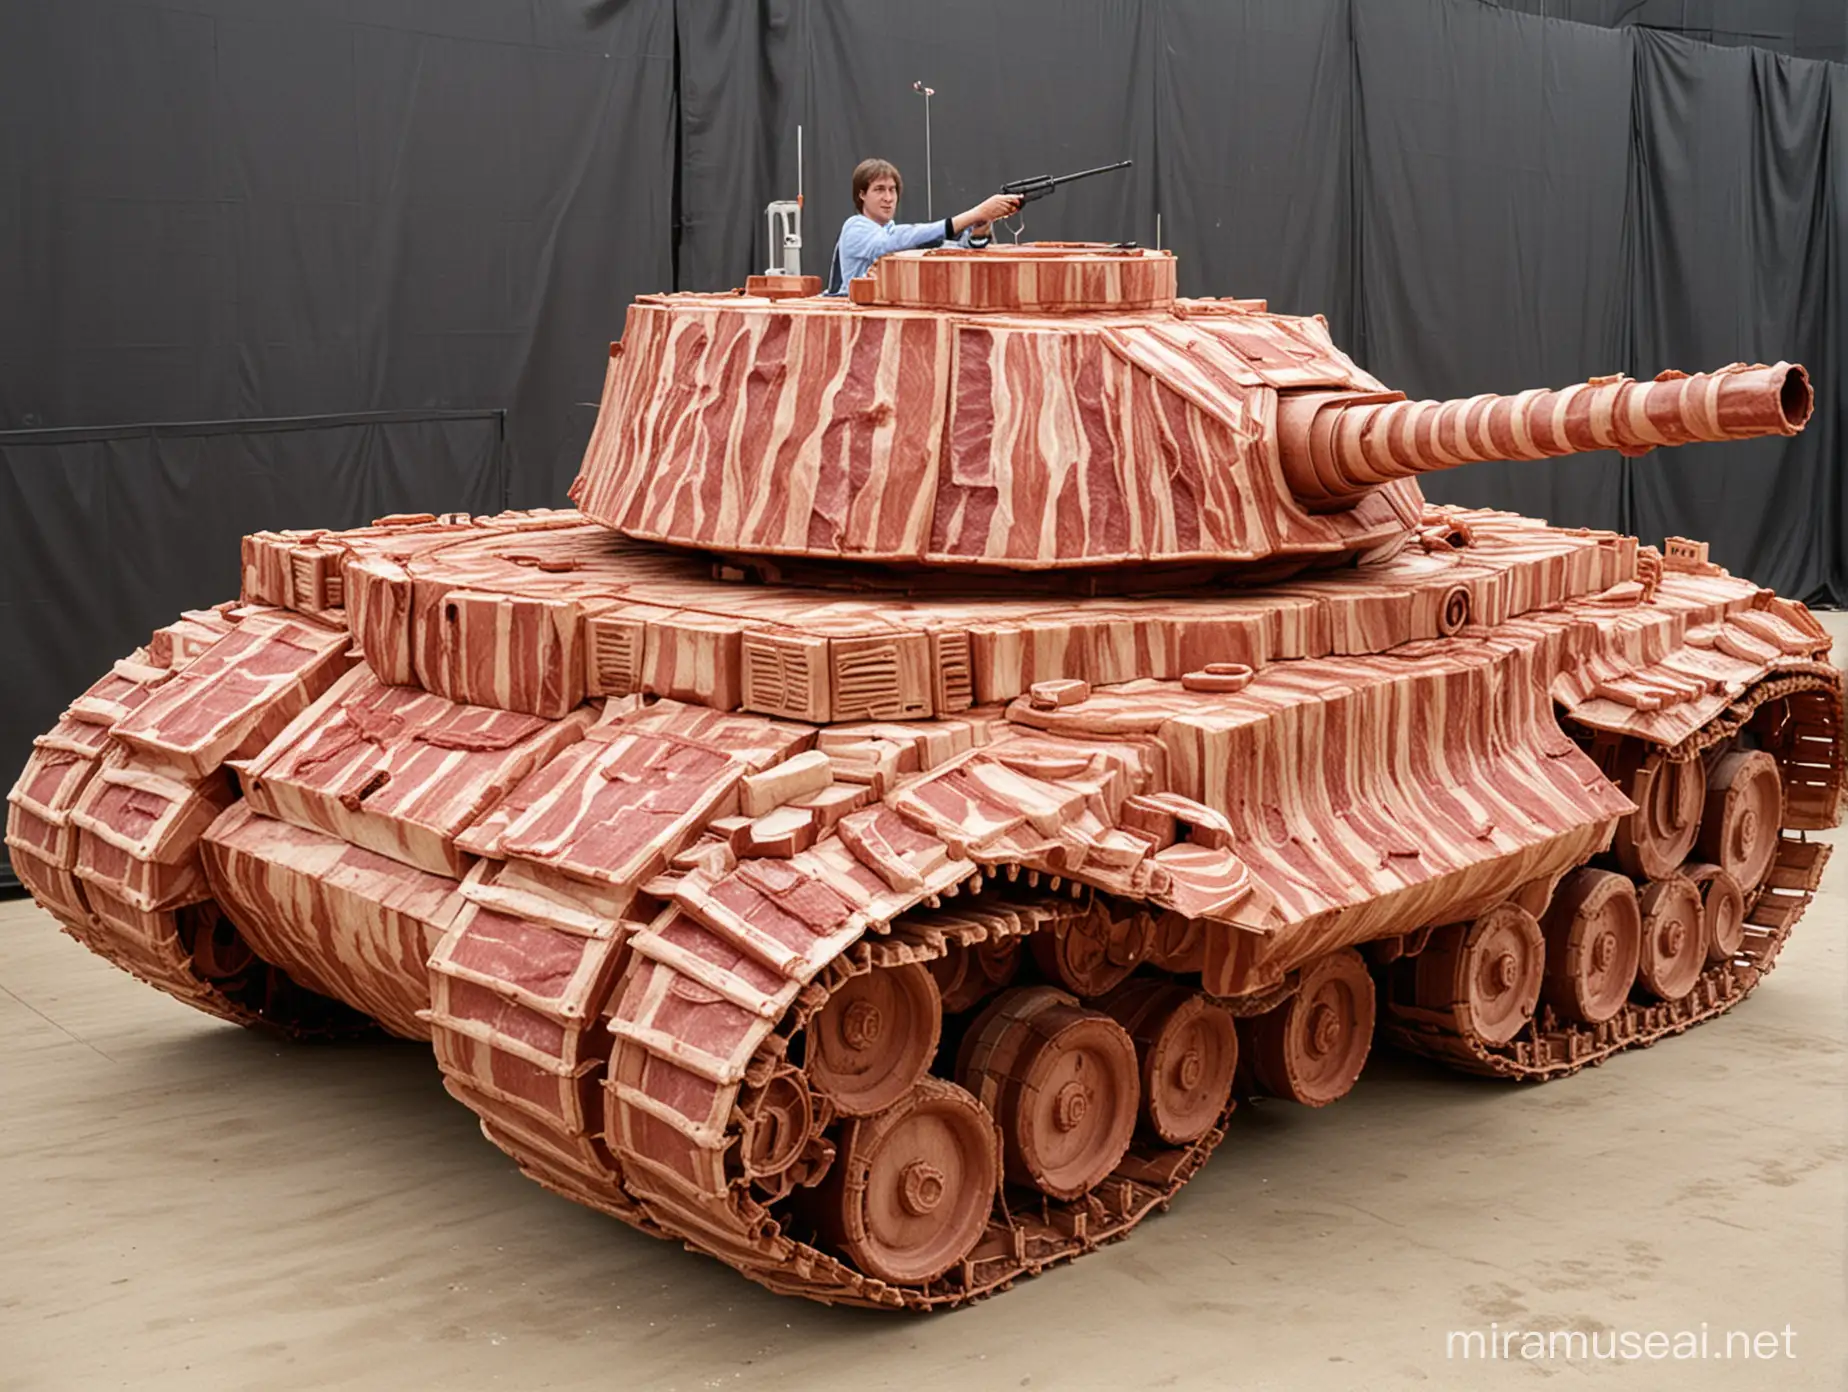 Gigantic Bacon Tank A Marvel of Culinary Creativity